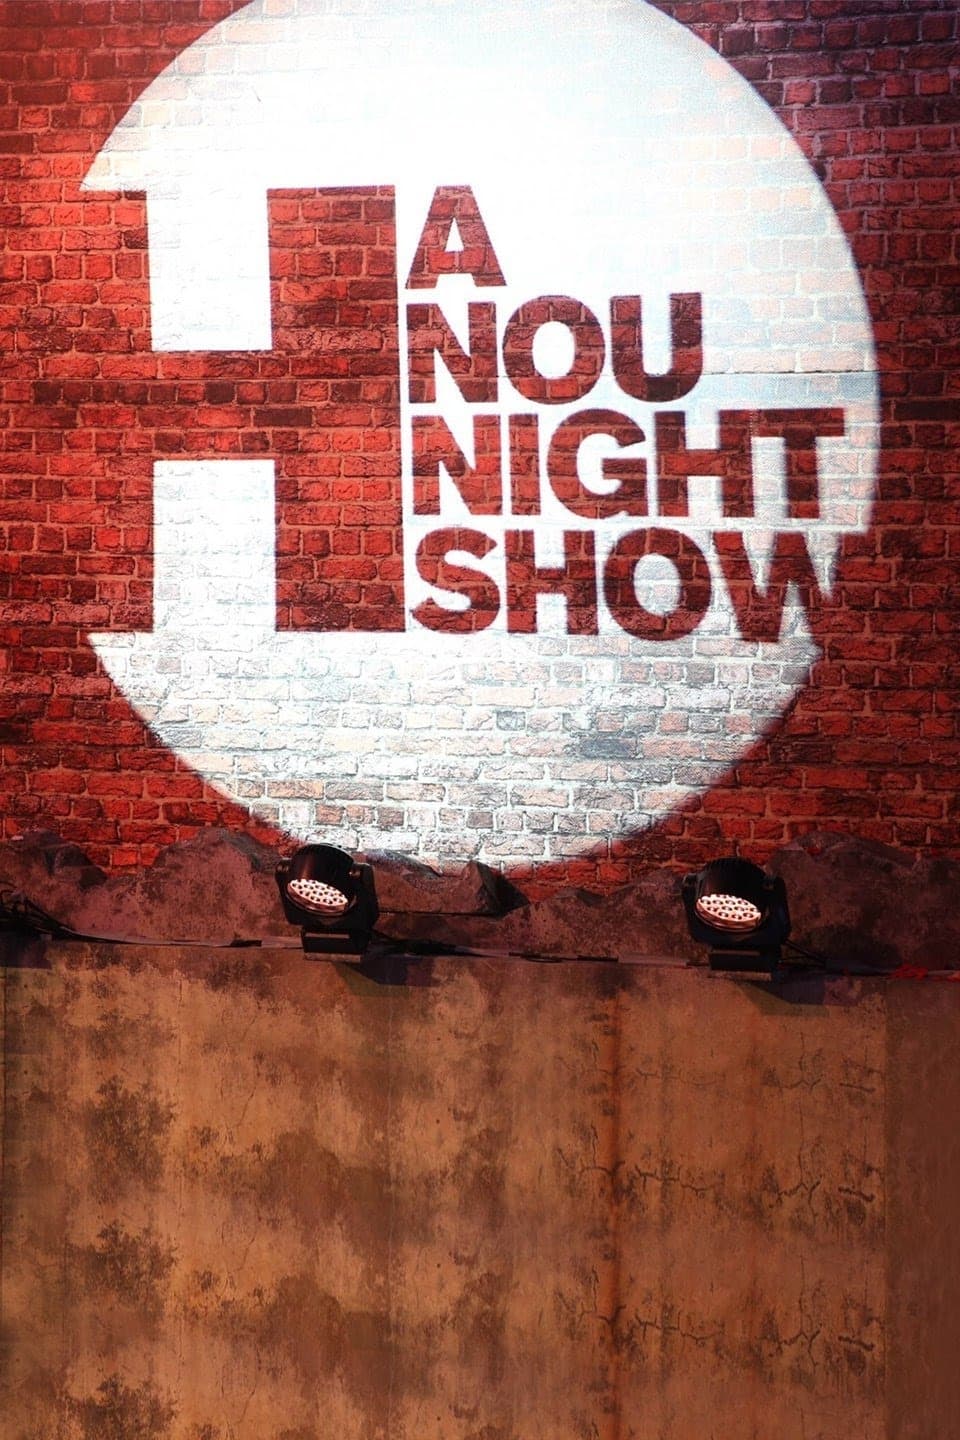 Hanounight Show